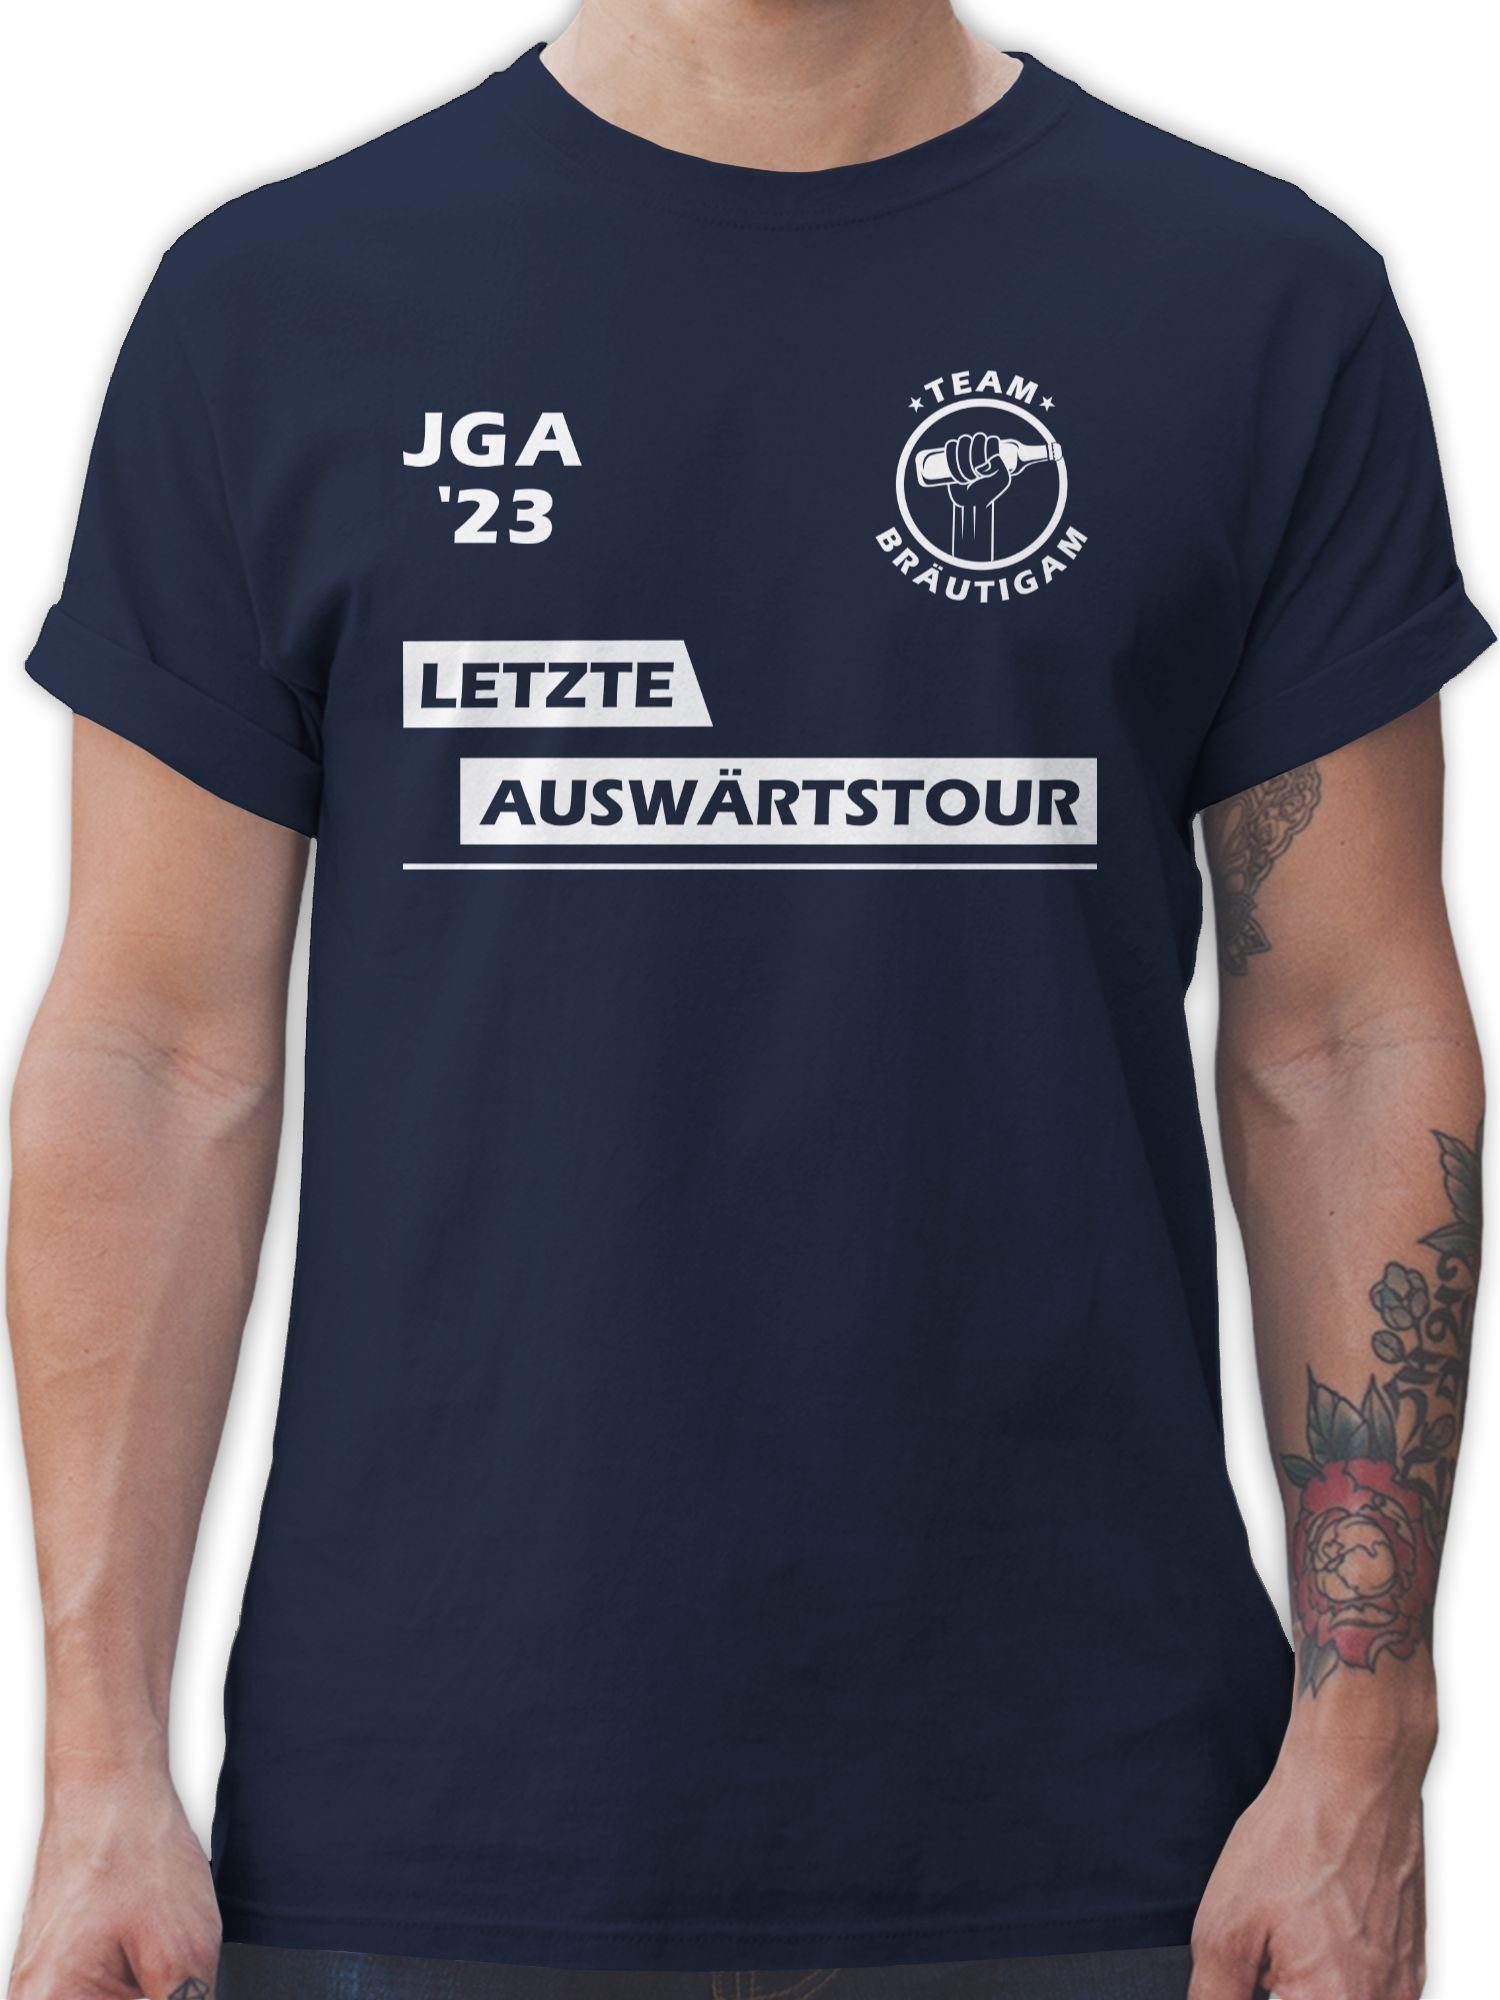 Shirtracer T-Shirt Letzte Auswärtstour Team Bräutigam JGA Männer 2 Navy Blau | T-Shirts